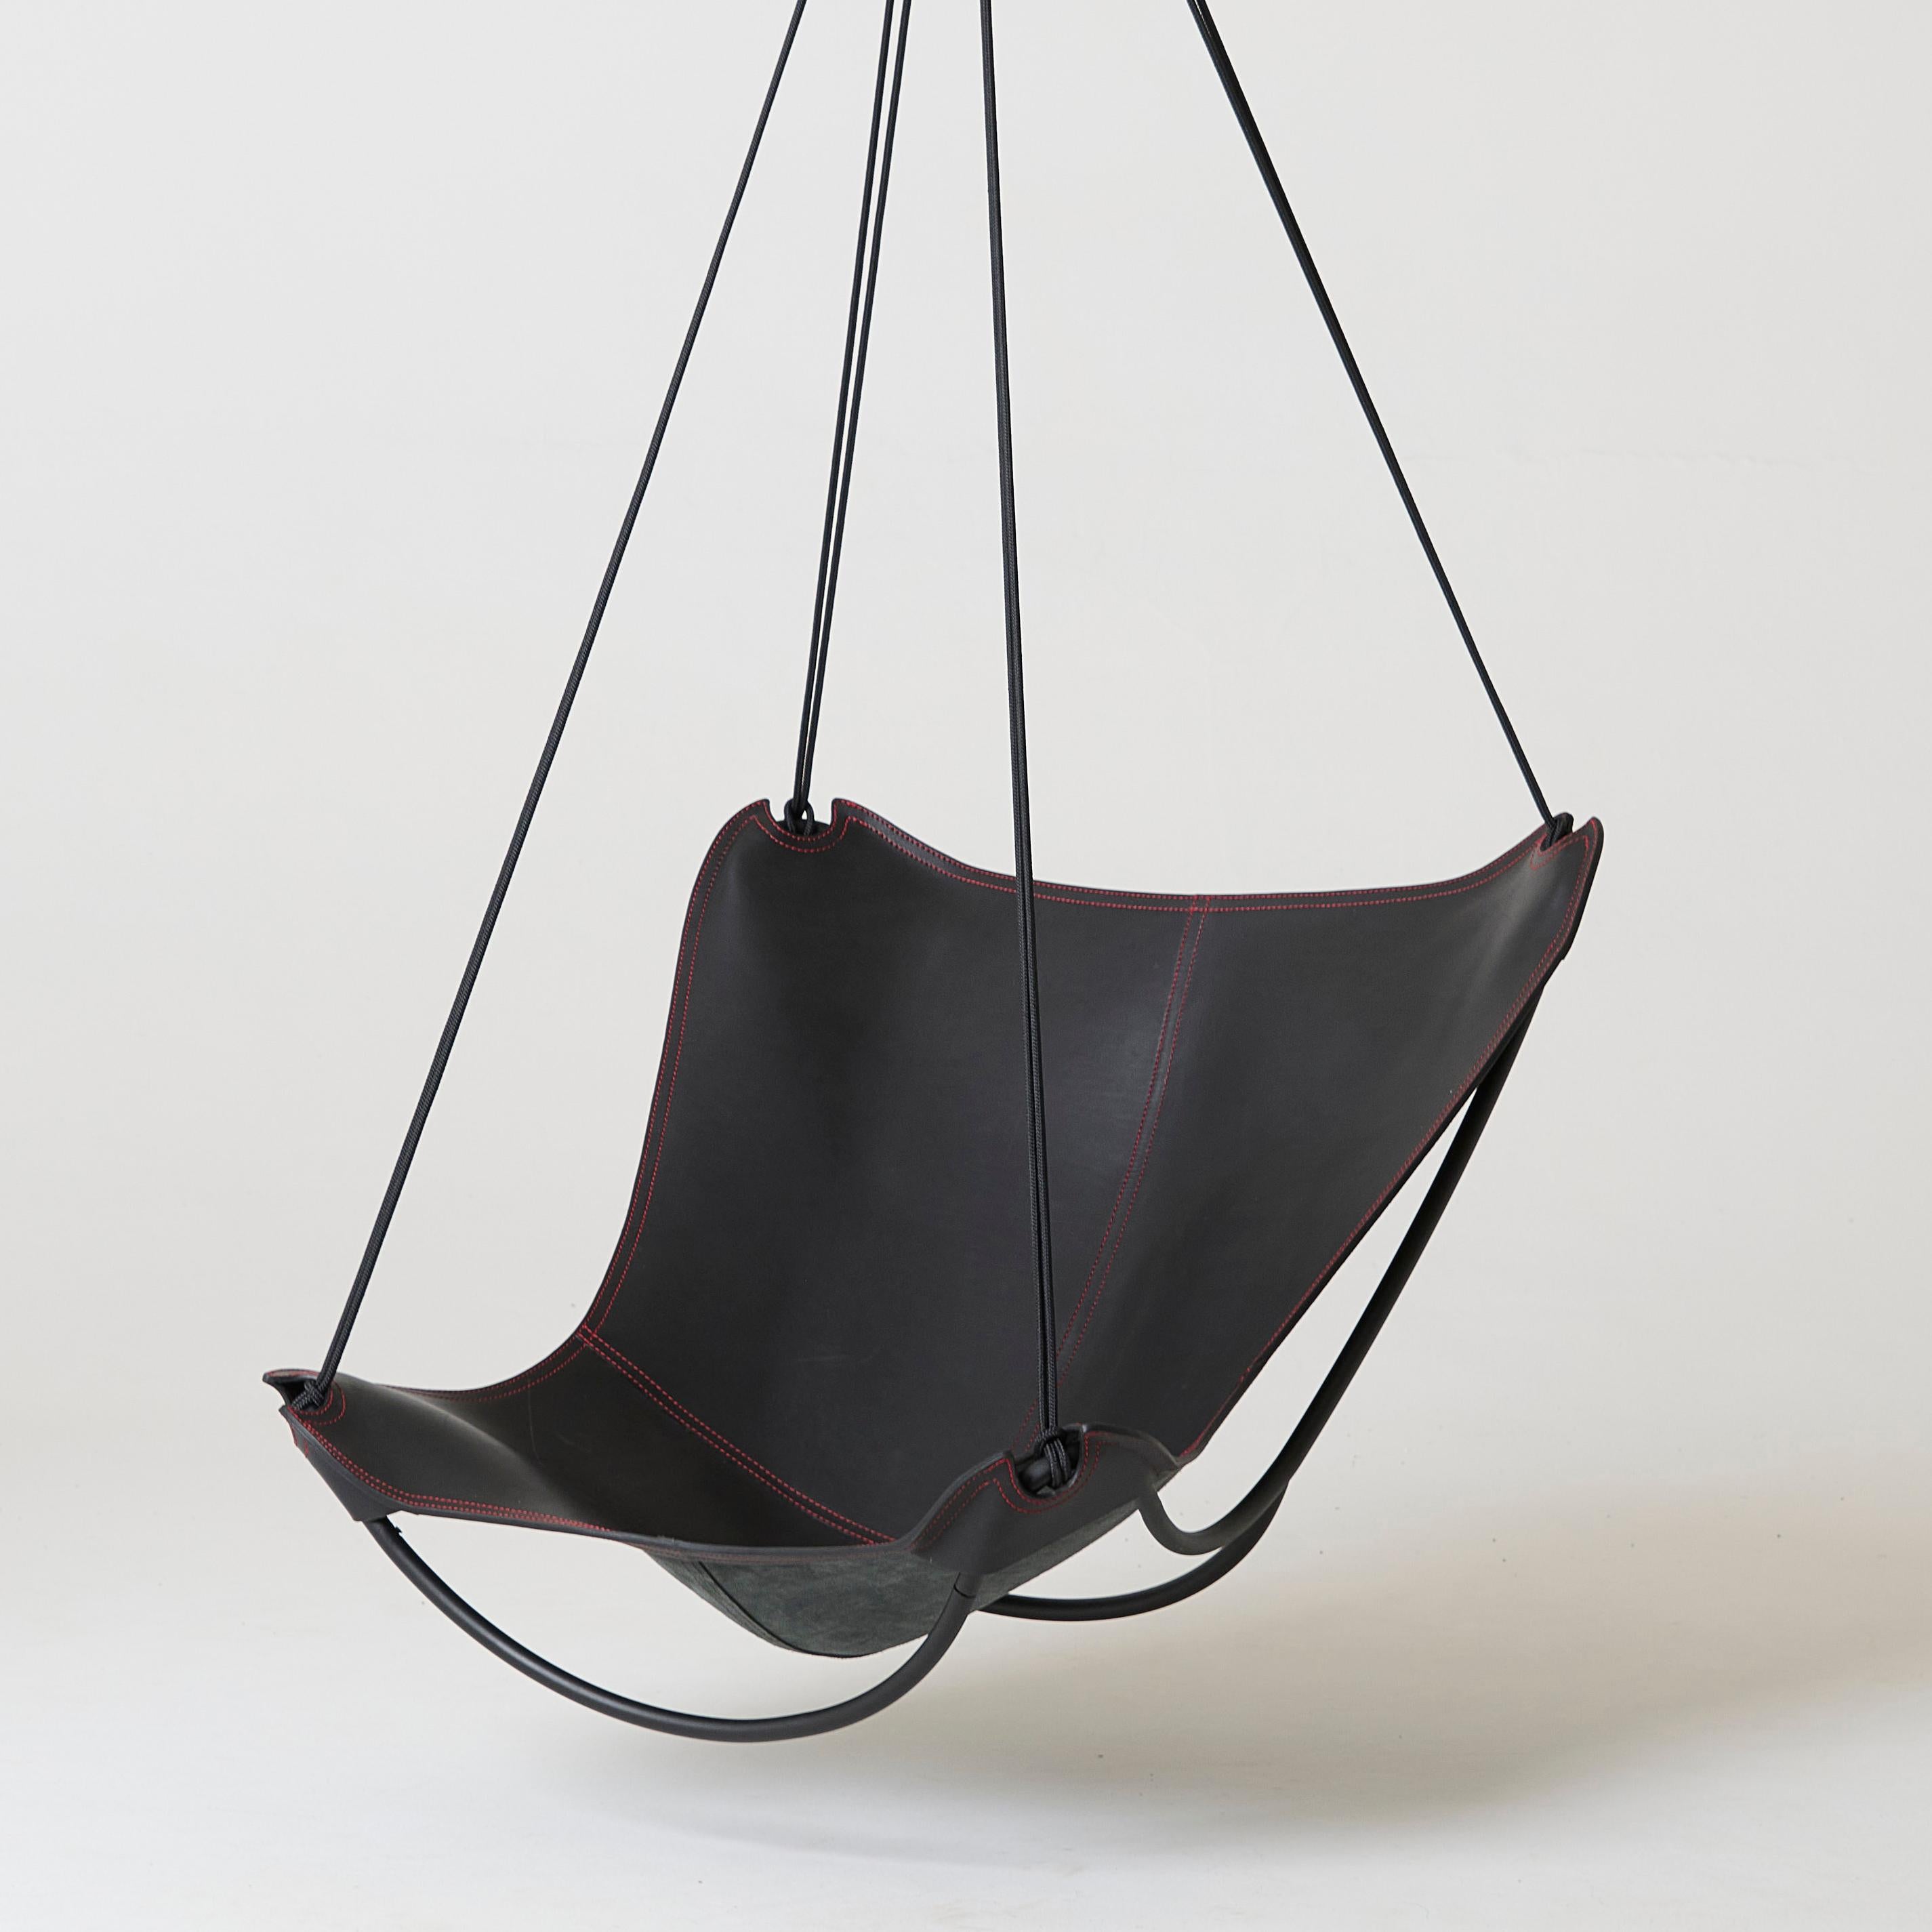 Moderne The Moderns Butterfly Hanging Swing Chair (fauteuil balançoire suspendu en cuir) en vente